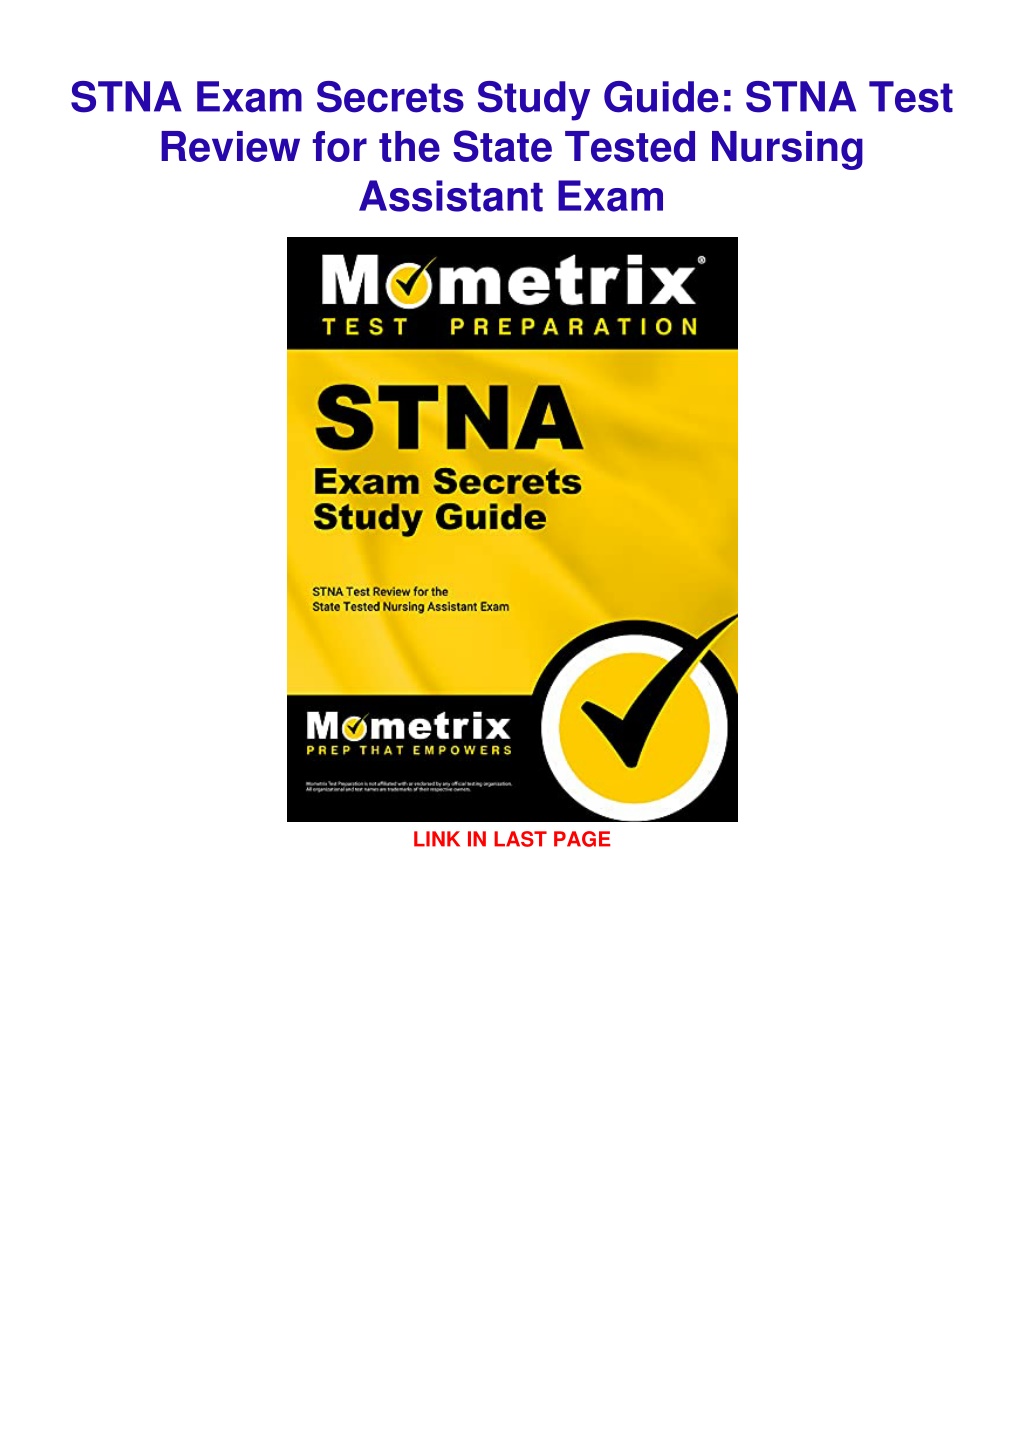 PPT [PDF READ ONLINE] STNA Exam Secrets Study Guide STNA Test Review